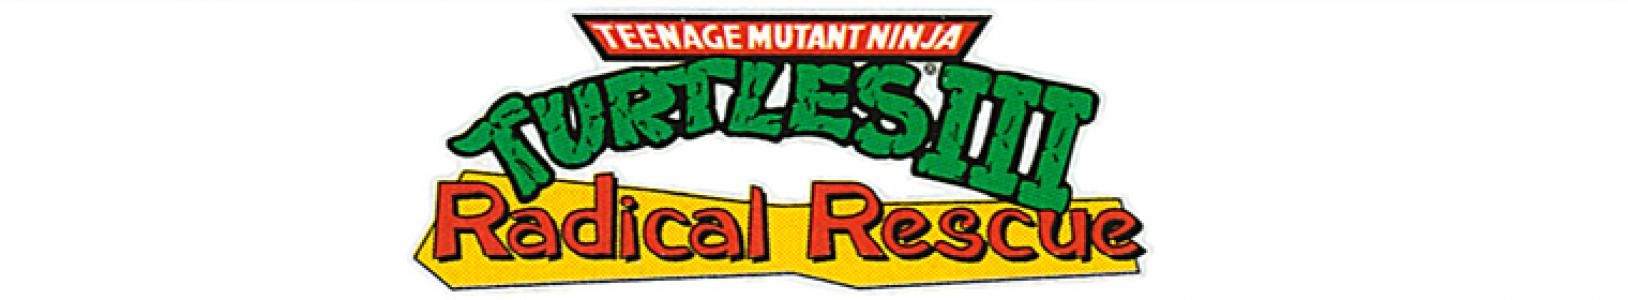 Teenage Mutant Ninja Turtles III: Radical Rescue banner